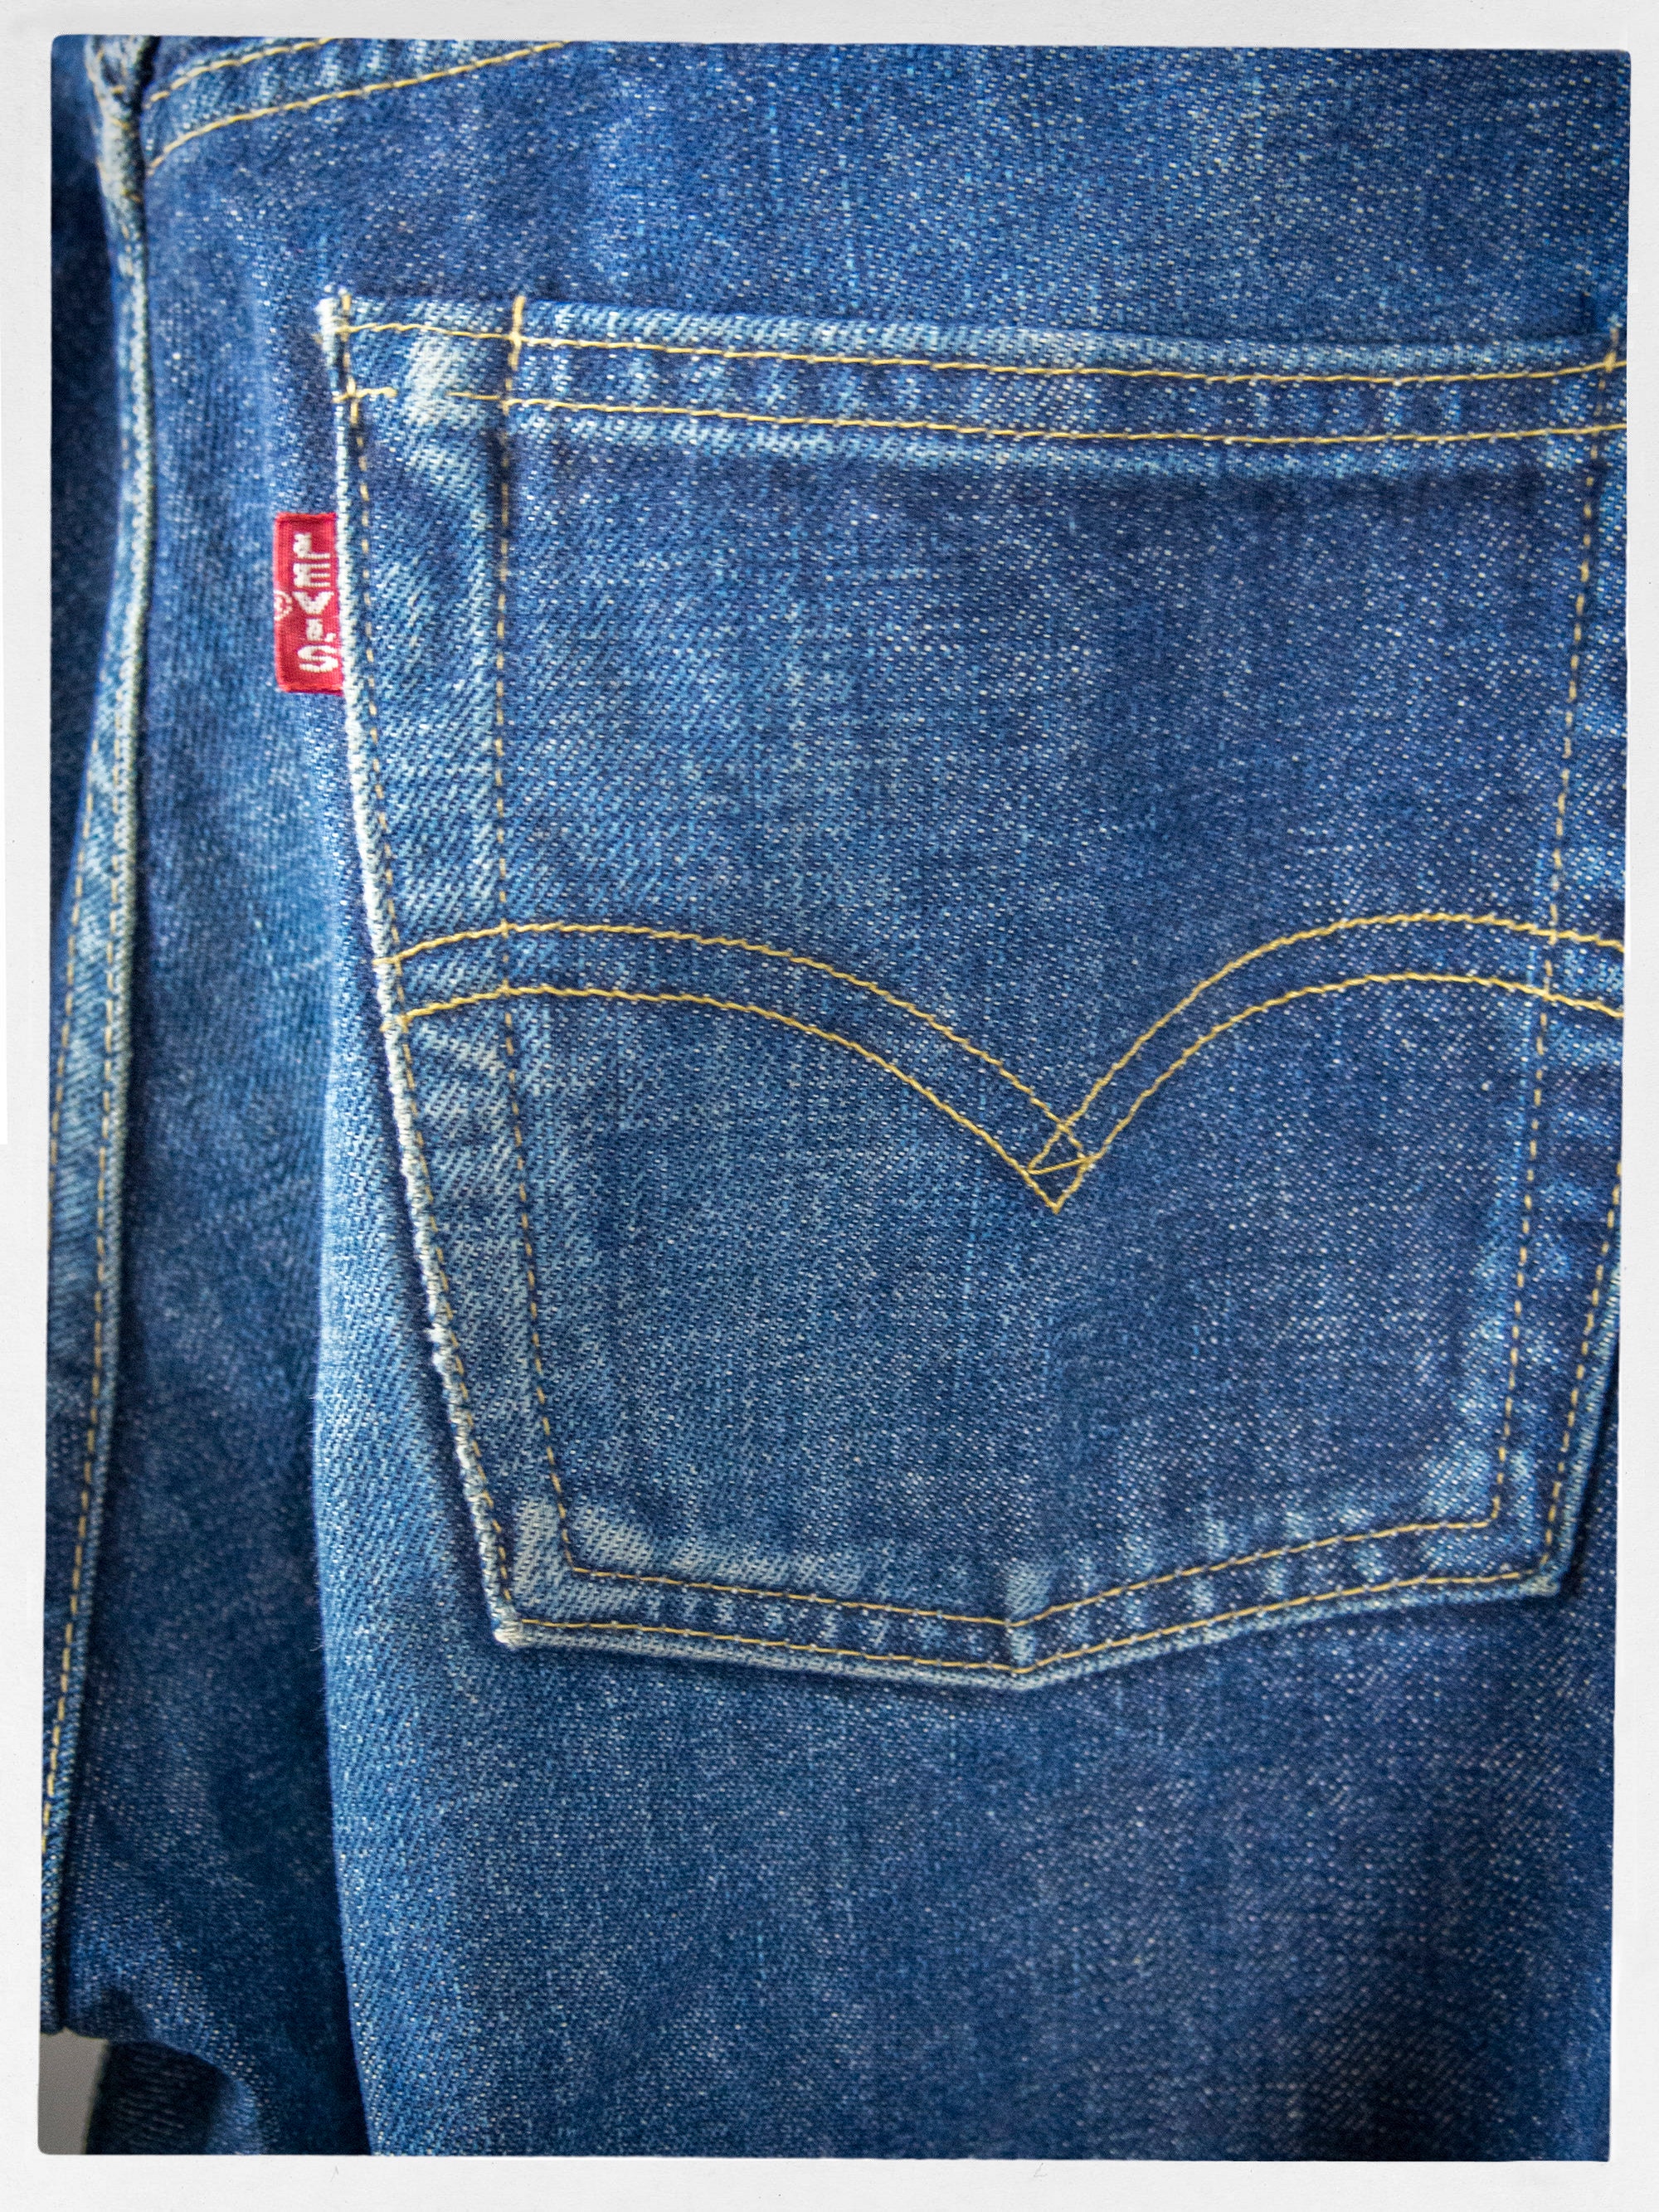 Retro 80s Levi's Jeans, 503 Bxx Denim Jeans, Big E Indigo Jeans